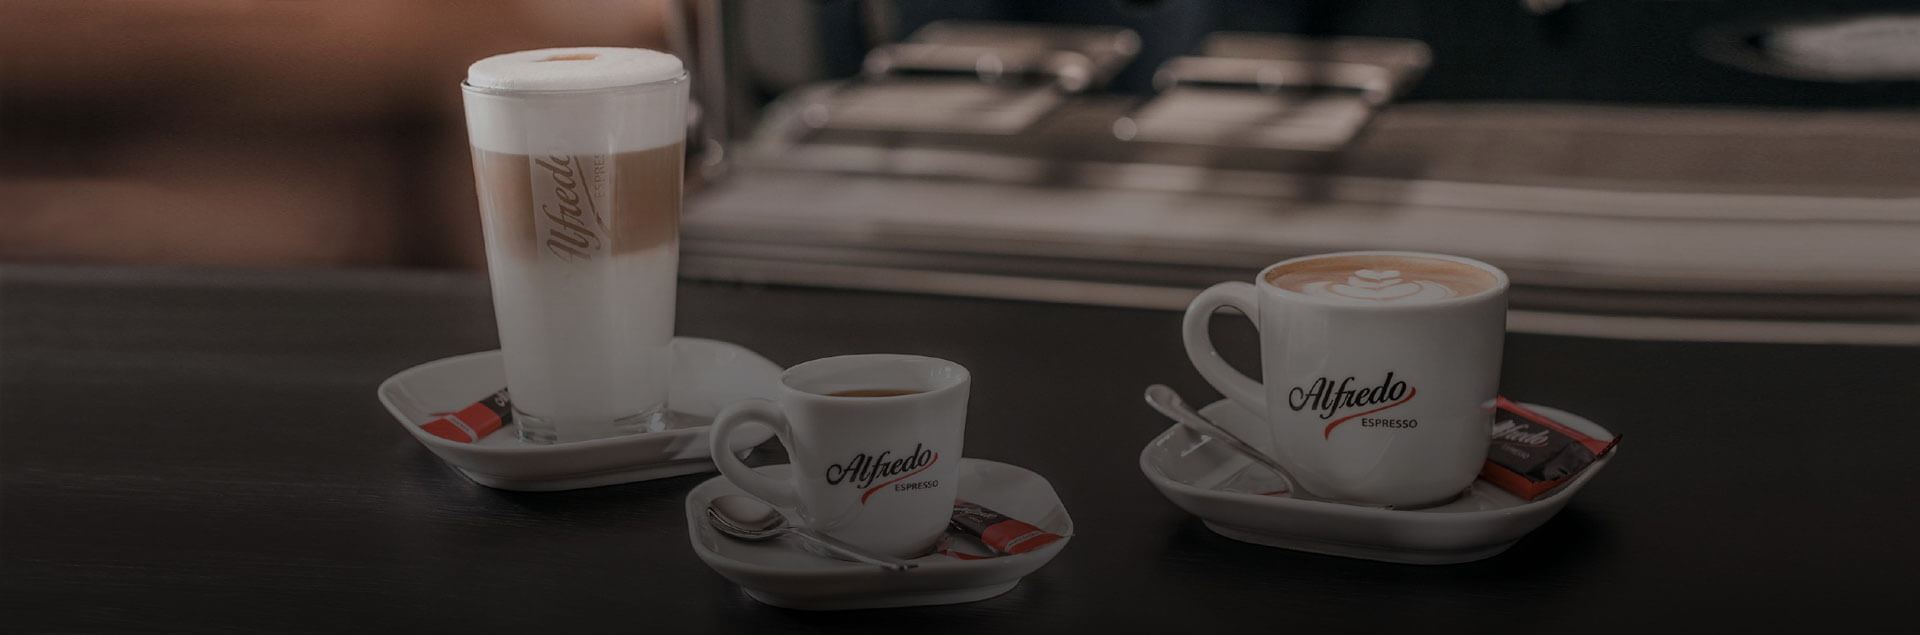 alfredo espresso rezepte klassiker jpg lang en IN width 1920 height 635 ext  